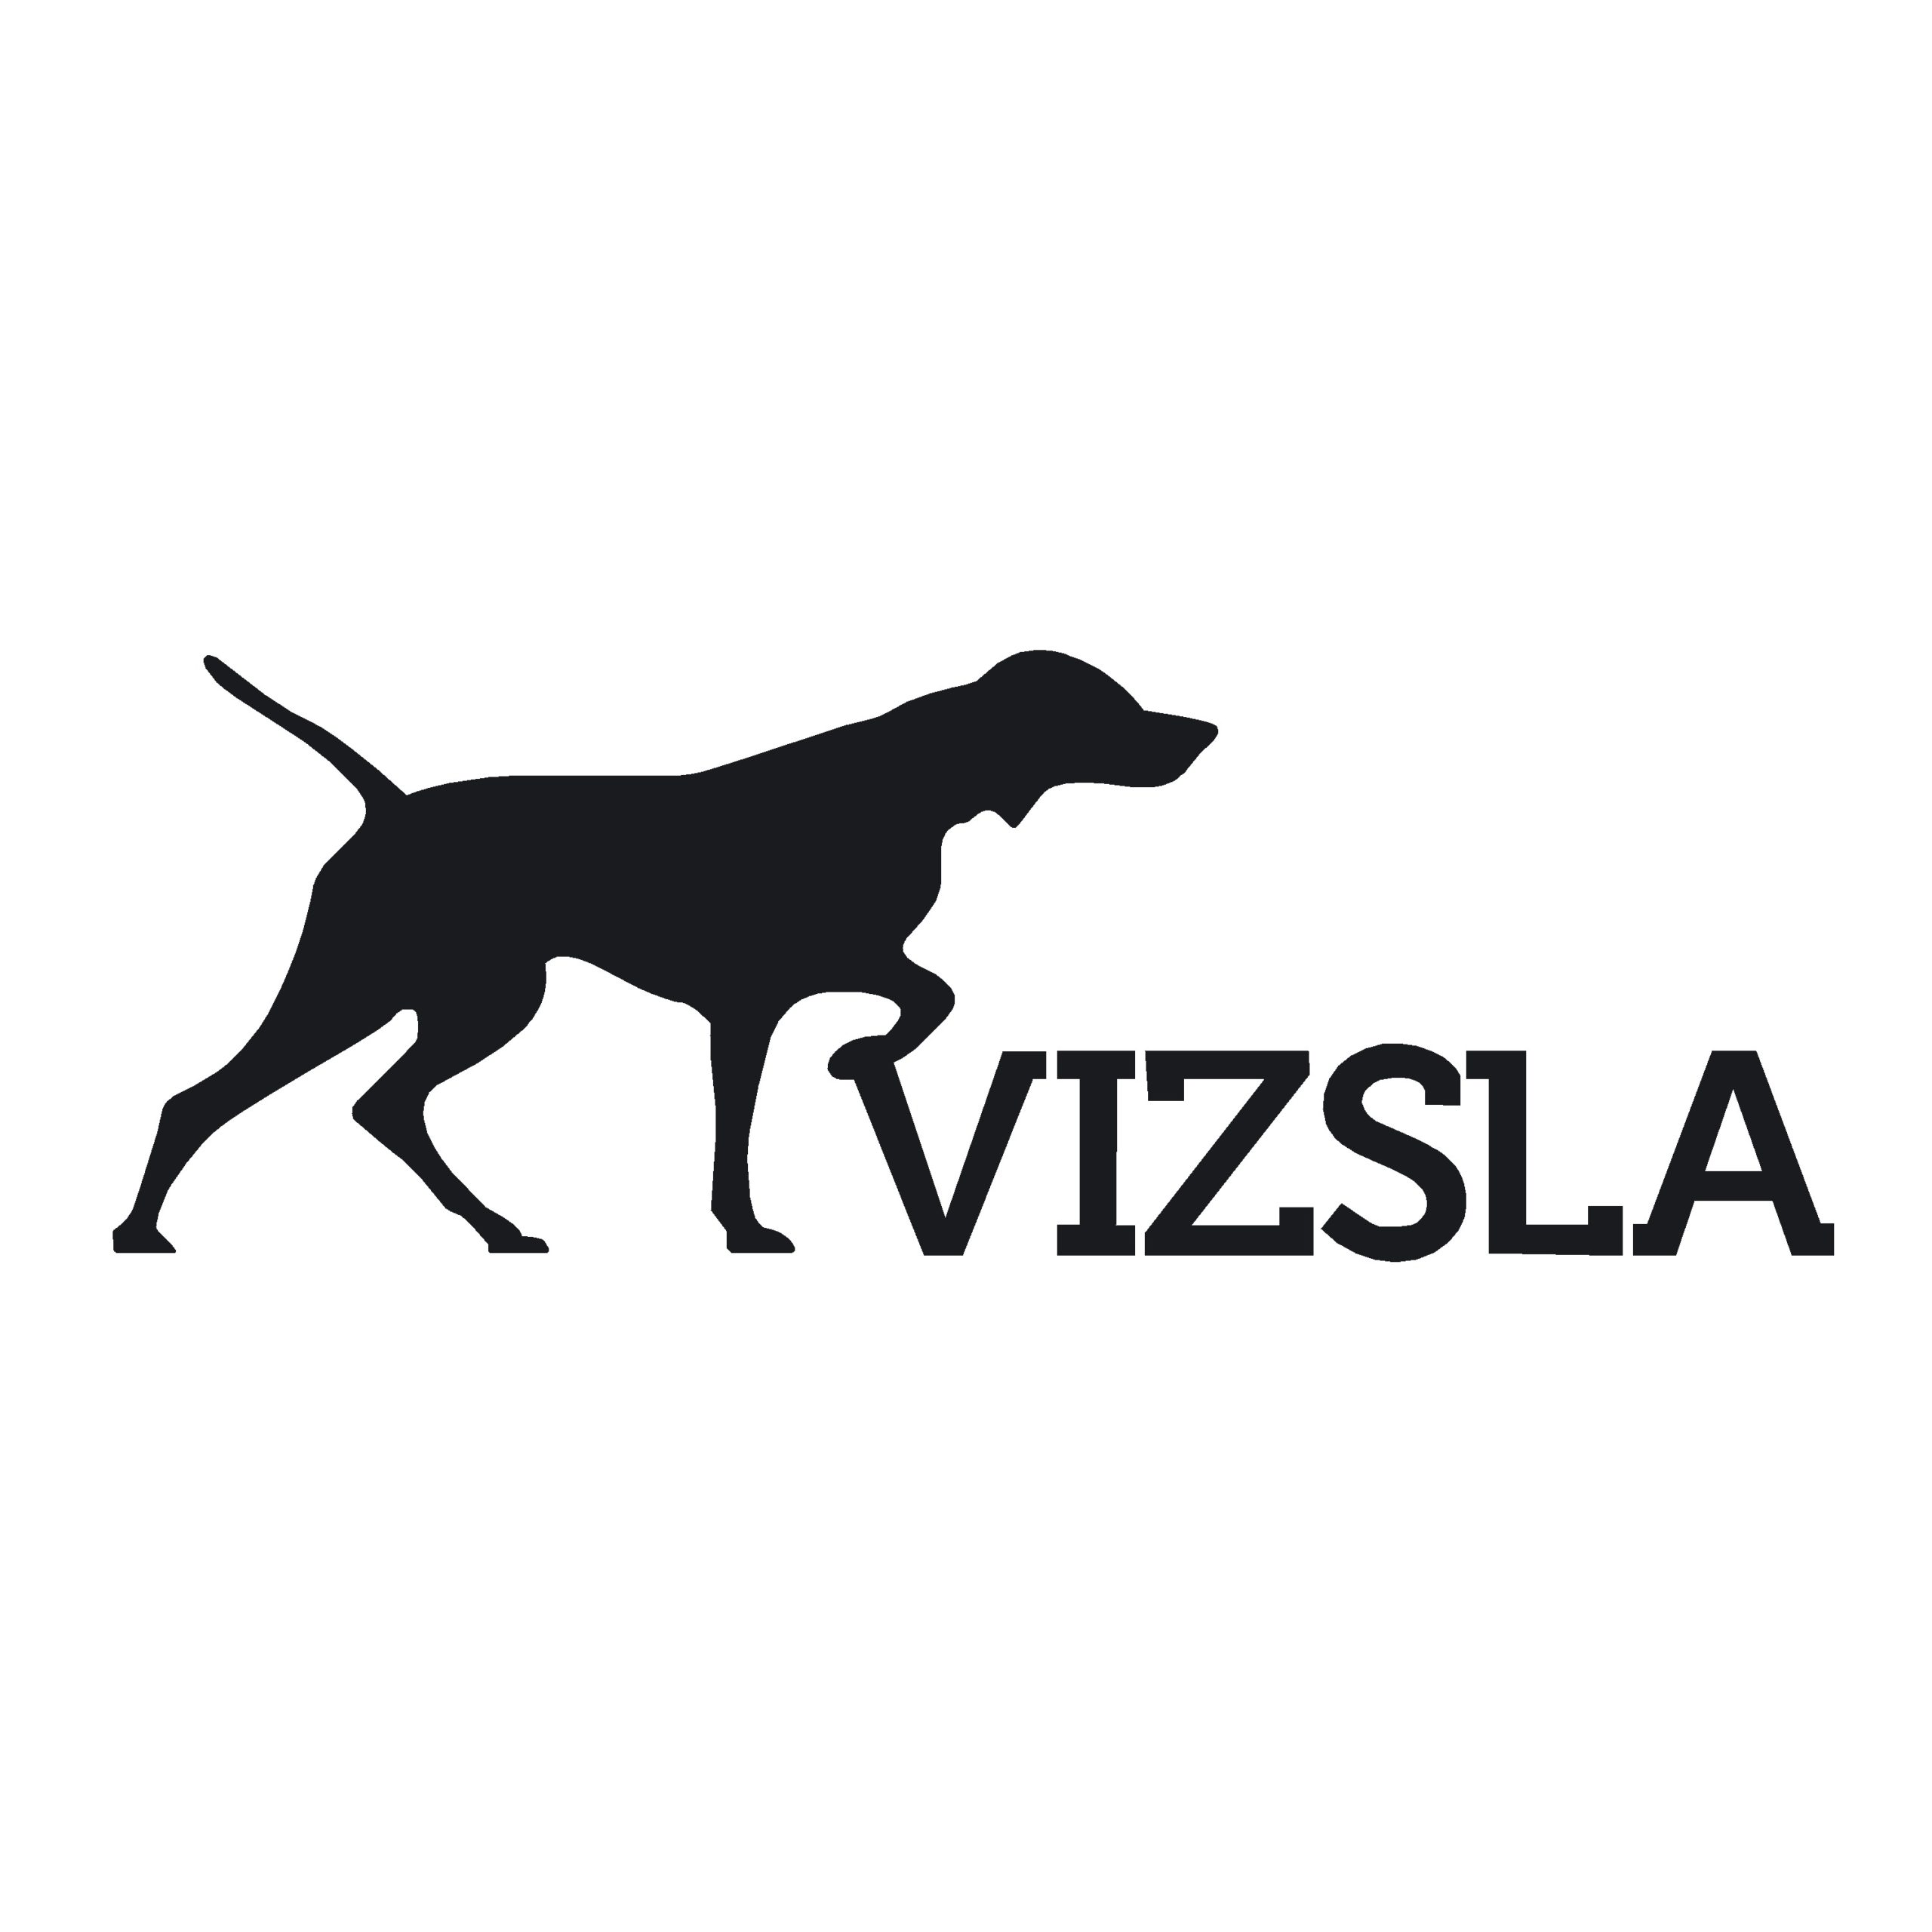 VIZSLA Vinyl Sticker Decal AKC Registered Dog Breed Cat 